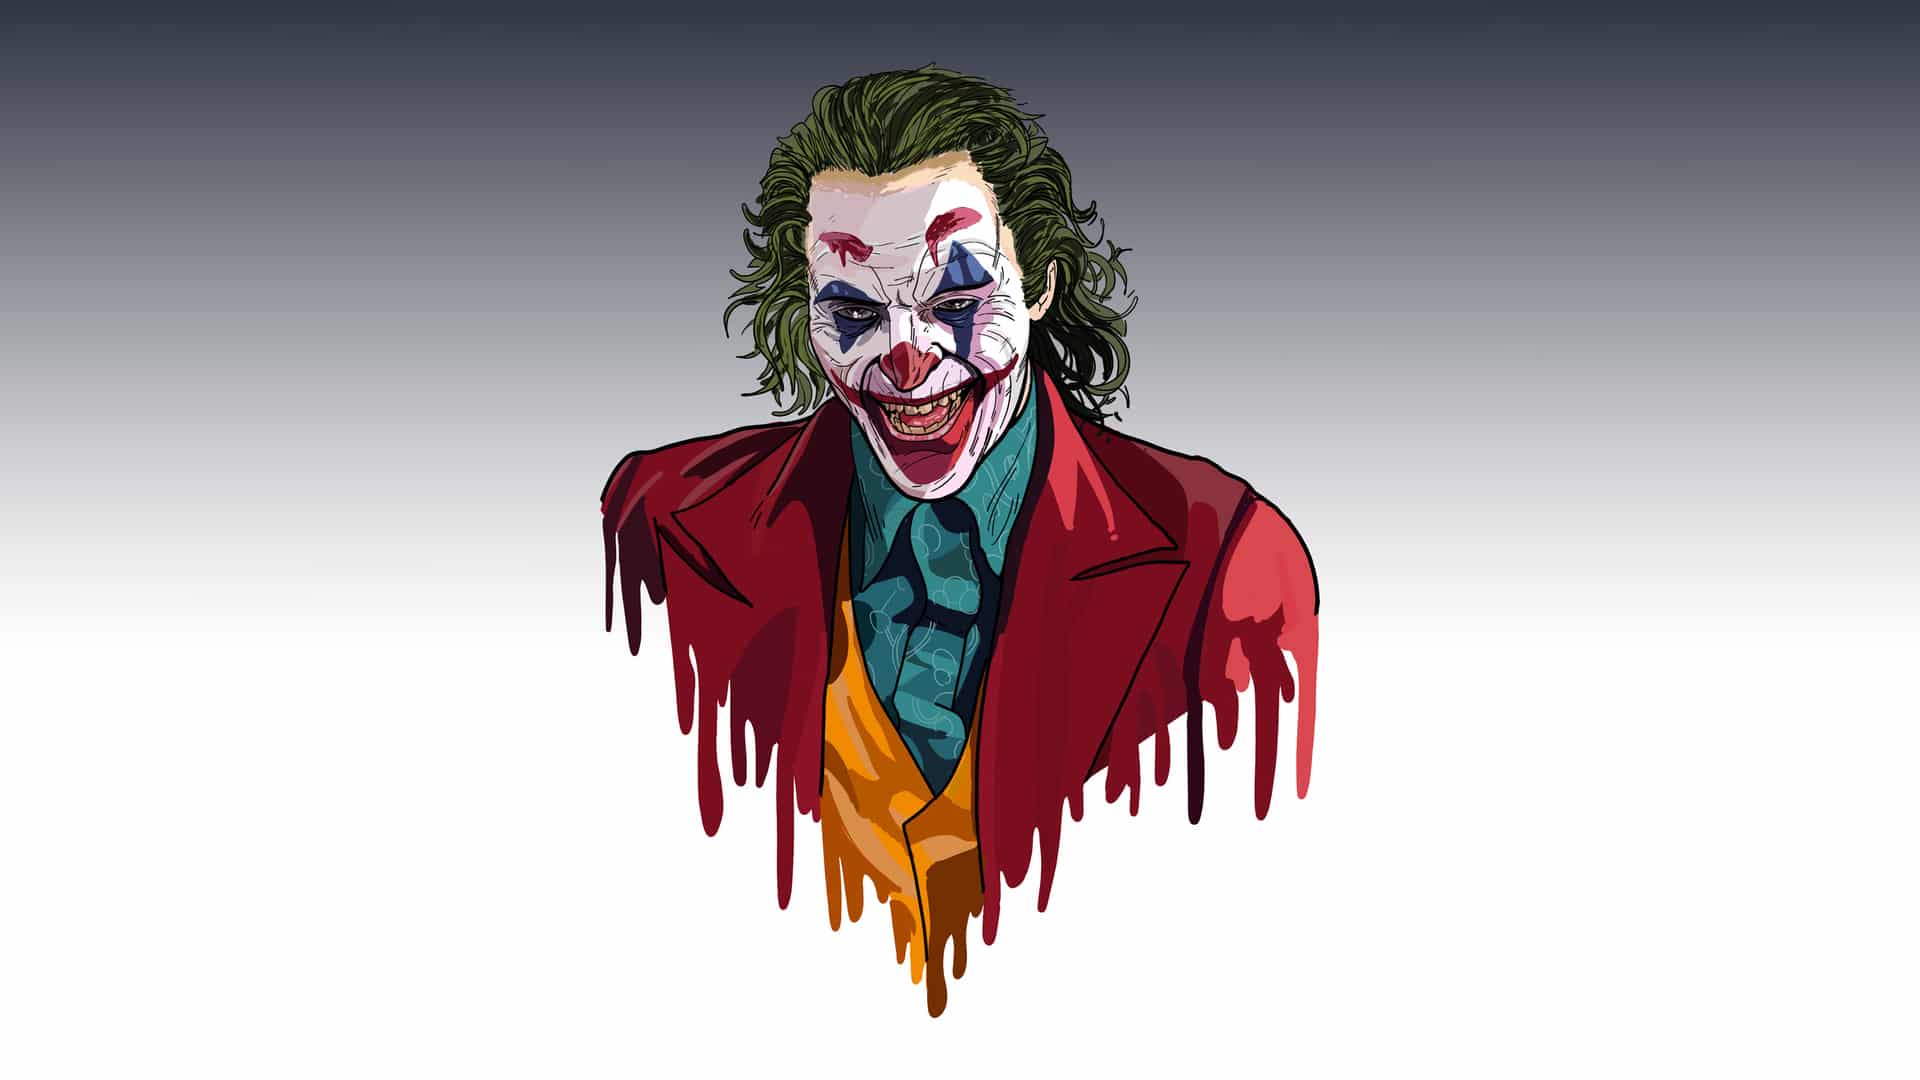 Ảnh Joker 2019 đẹp nhất.